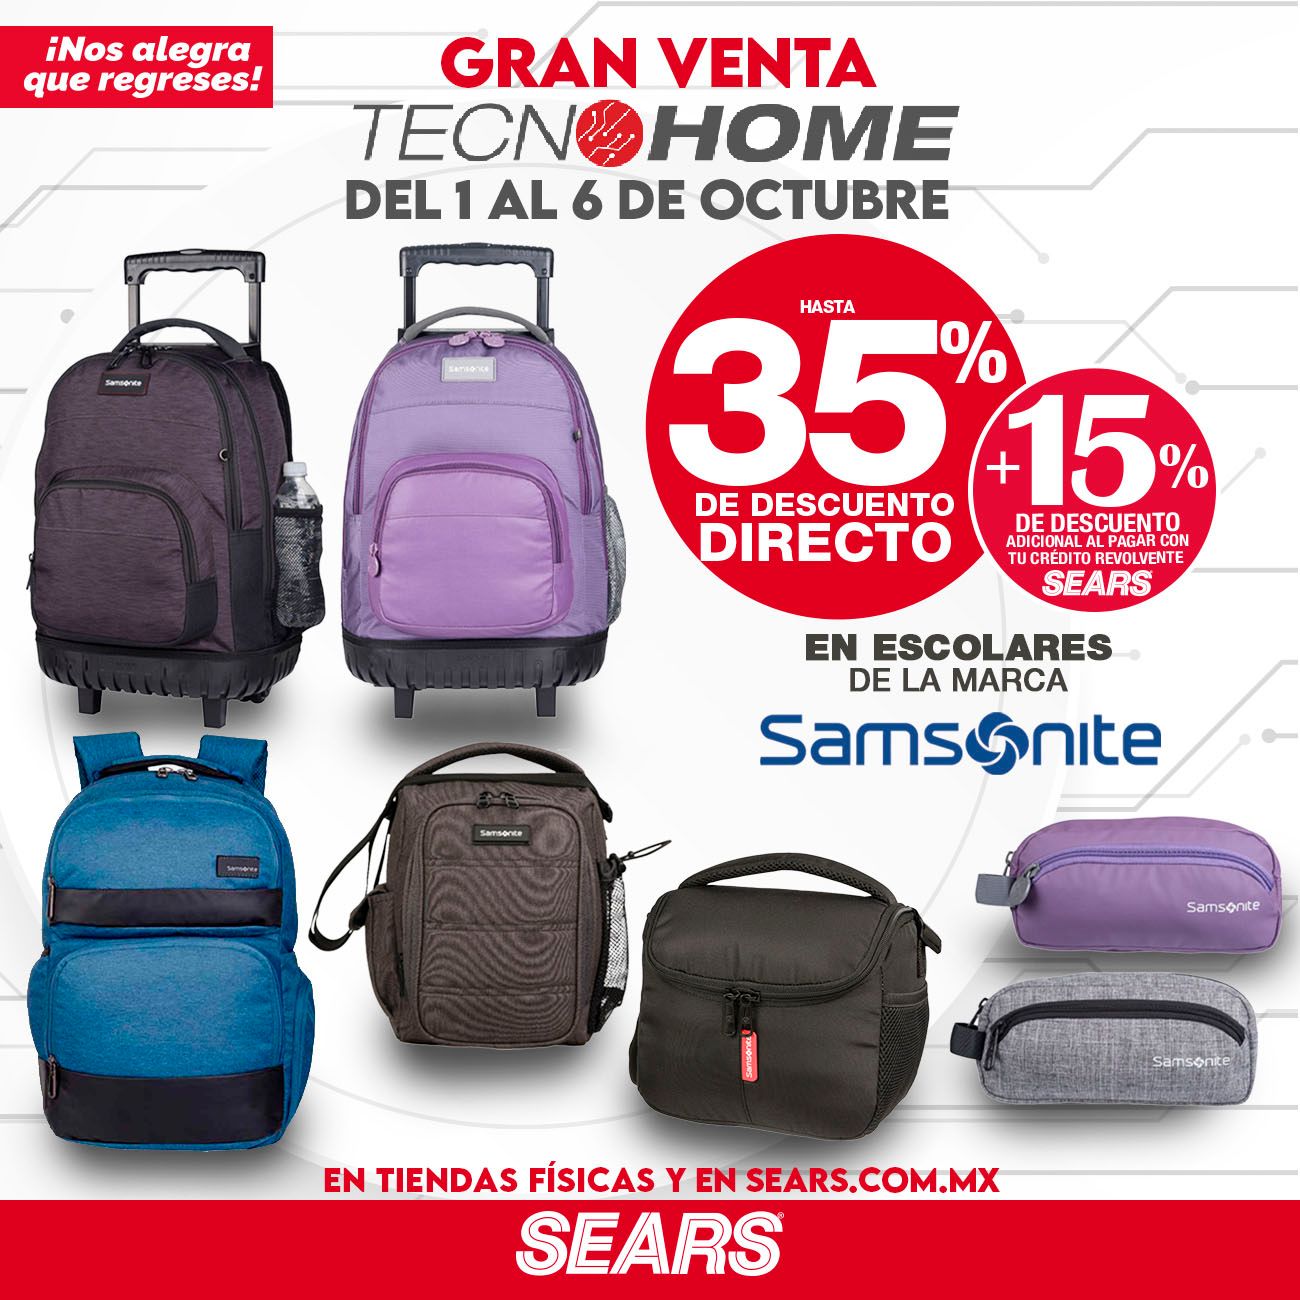 Sears México Twitter: "Descubre la colección mochilas escolares # Samsonite. ¡Te encantarán! ❤ Da clic aquí 👉https://t.co/WvKQdOCQRo Válido del 1 al 6 de octubre 2020. Consulta bases de esta promoción